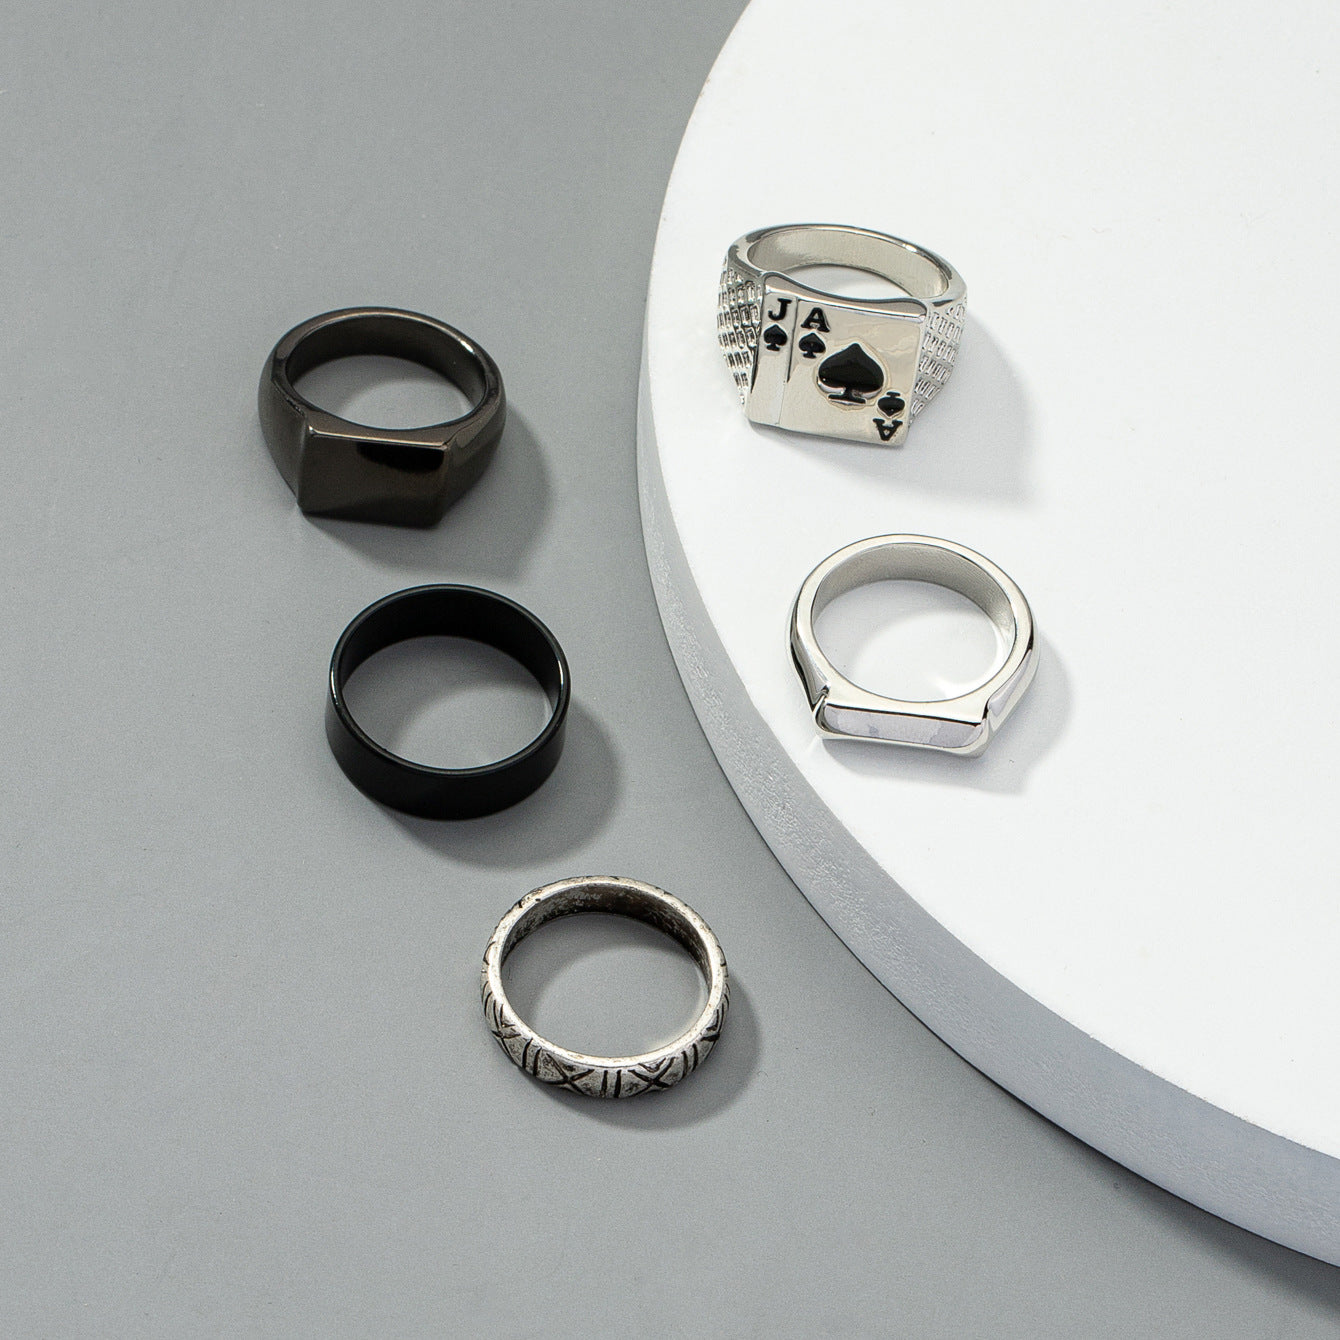 5-Piece Men's Metal Ring Set with Poker Stripe and Cross-Border Design